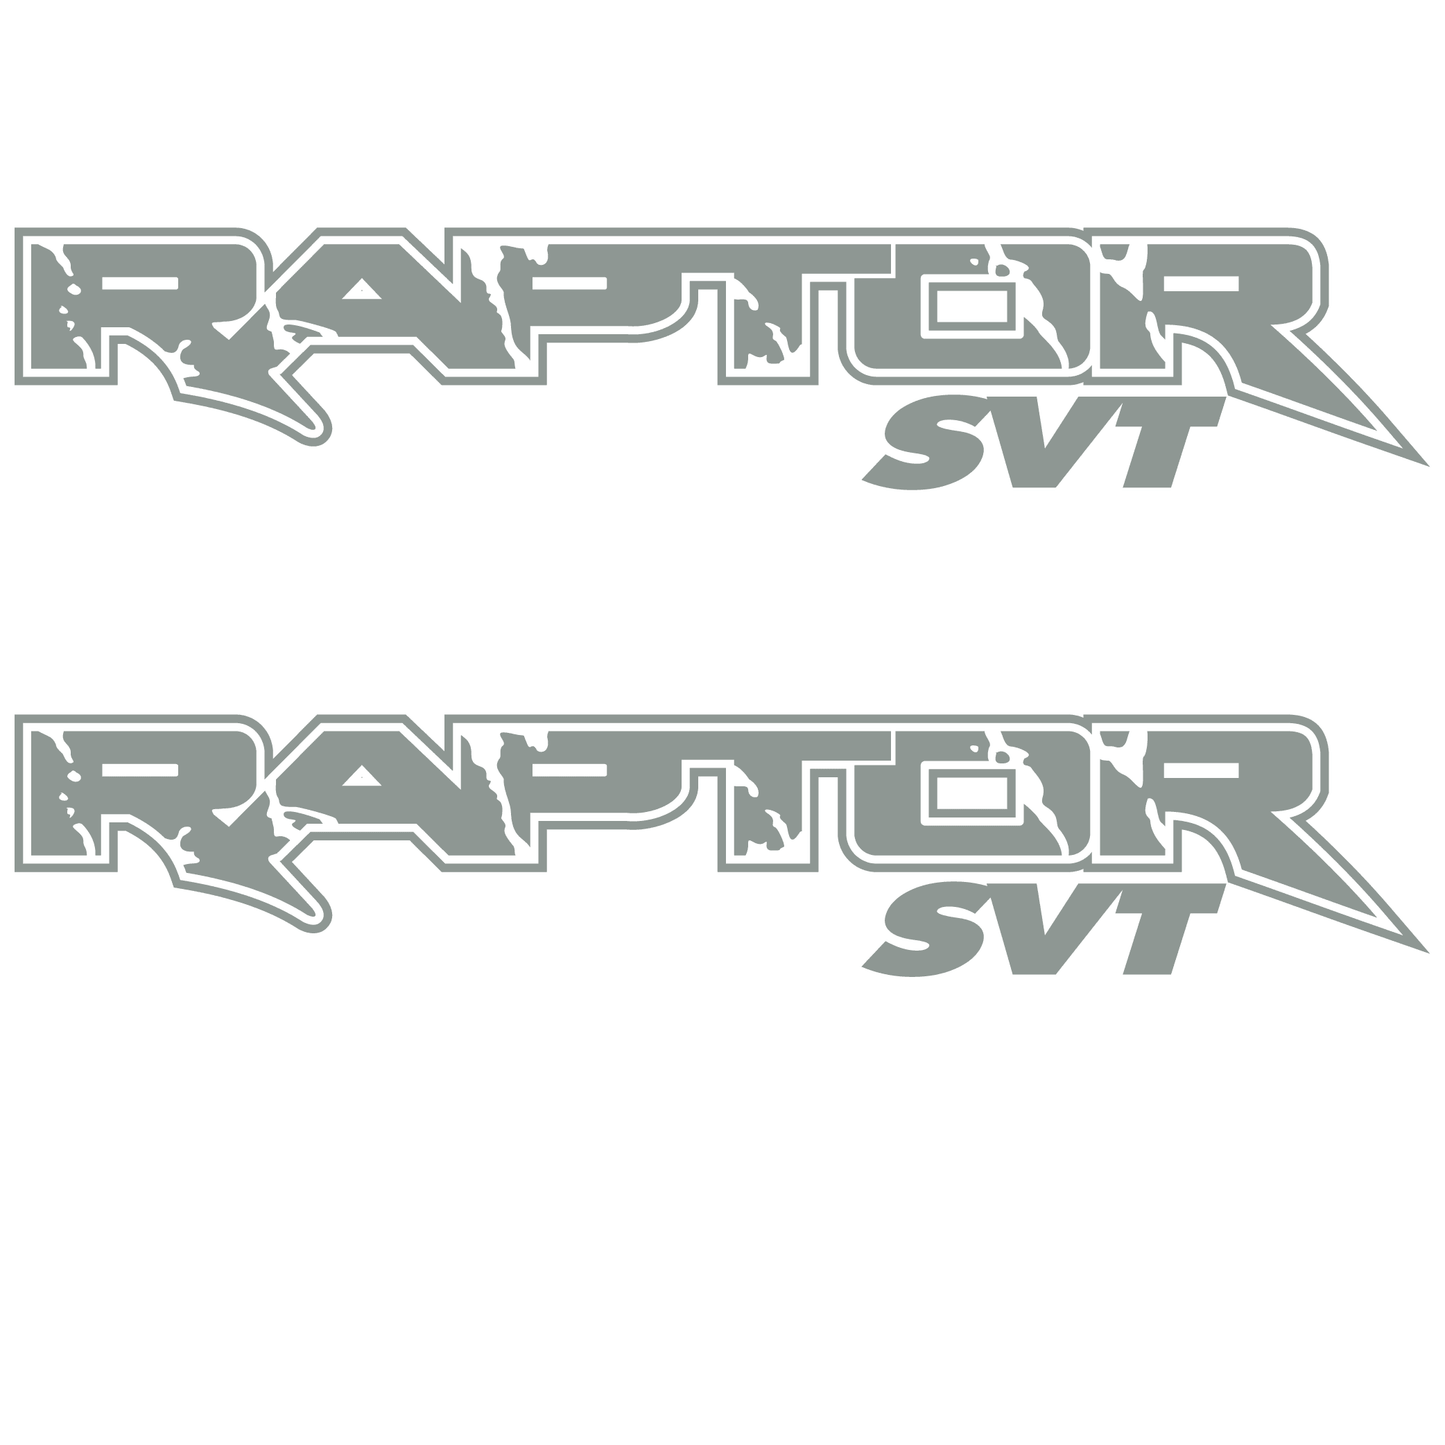 Shop Vinyl Design F-150 Raptor SVT Replacement Bedside Decals #010 Vehicle Decal Grey Gloss Shop Vinyl Design decals stickers